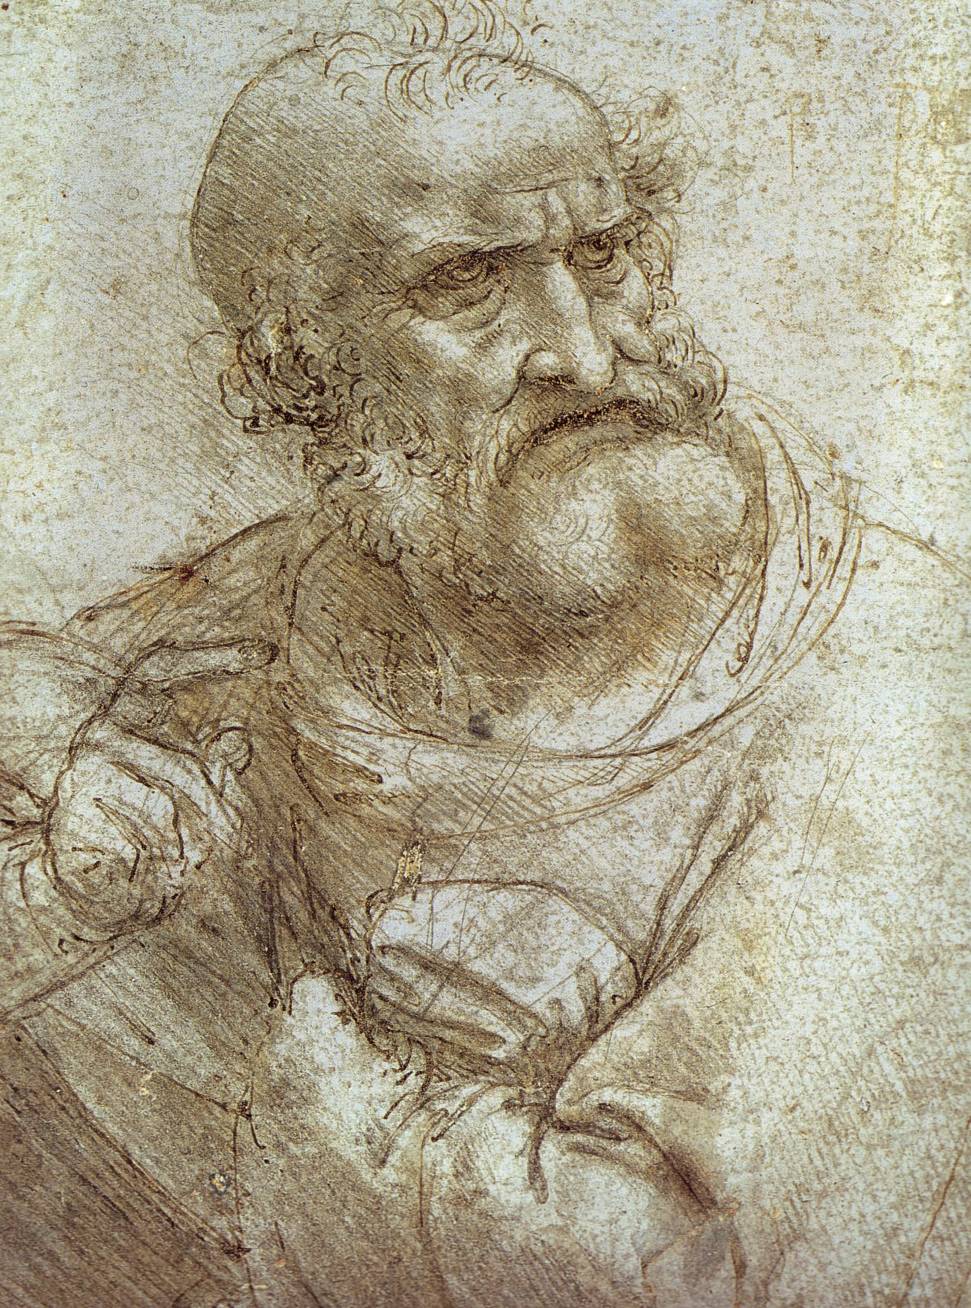 Leonardo da Vinci Ten Drawings from the Royal Collection